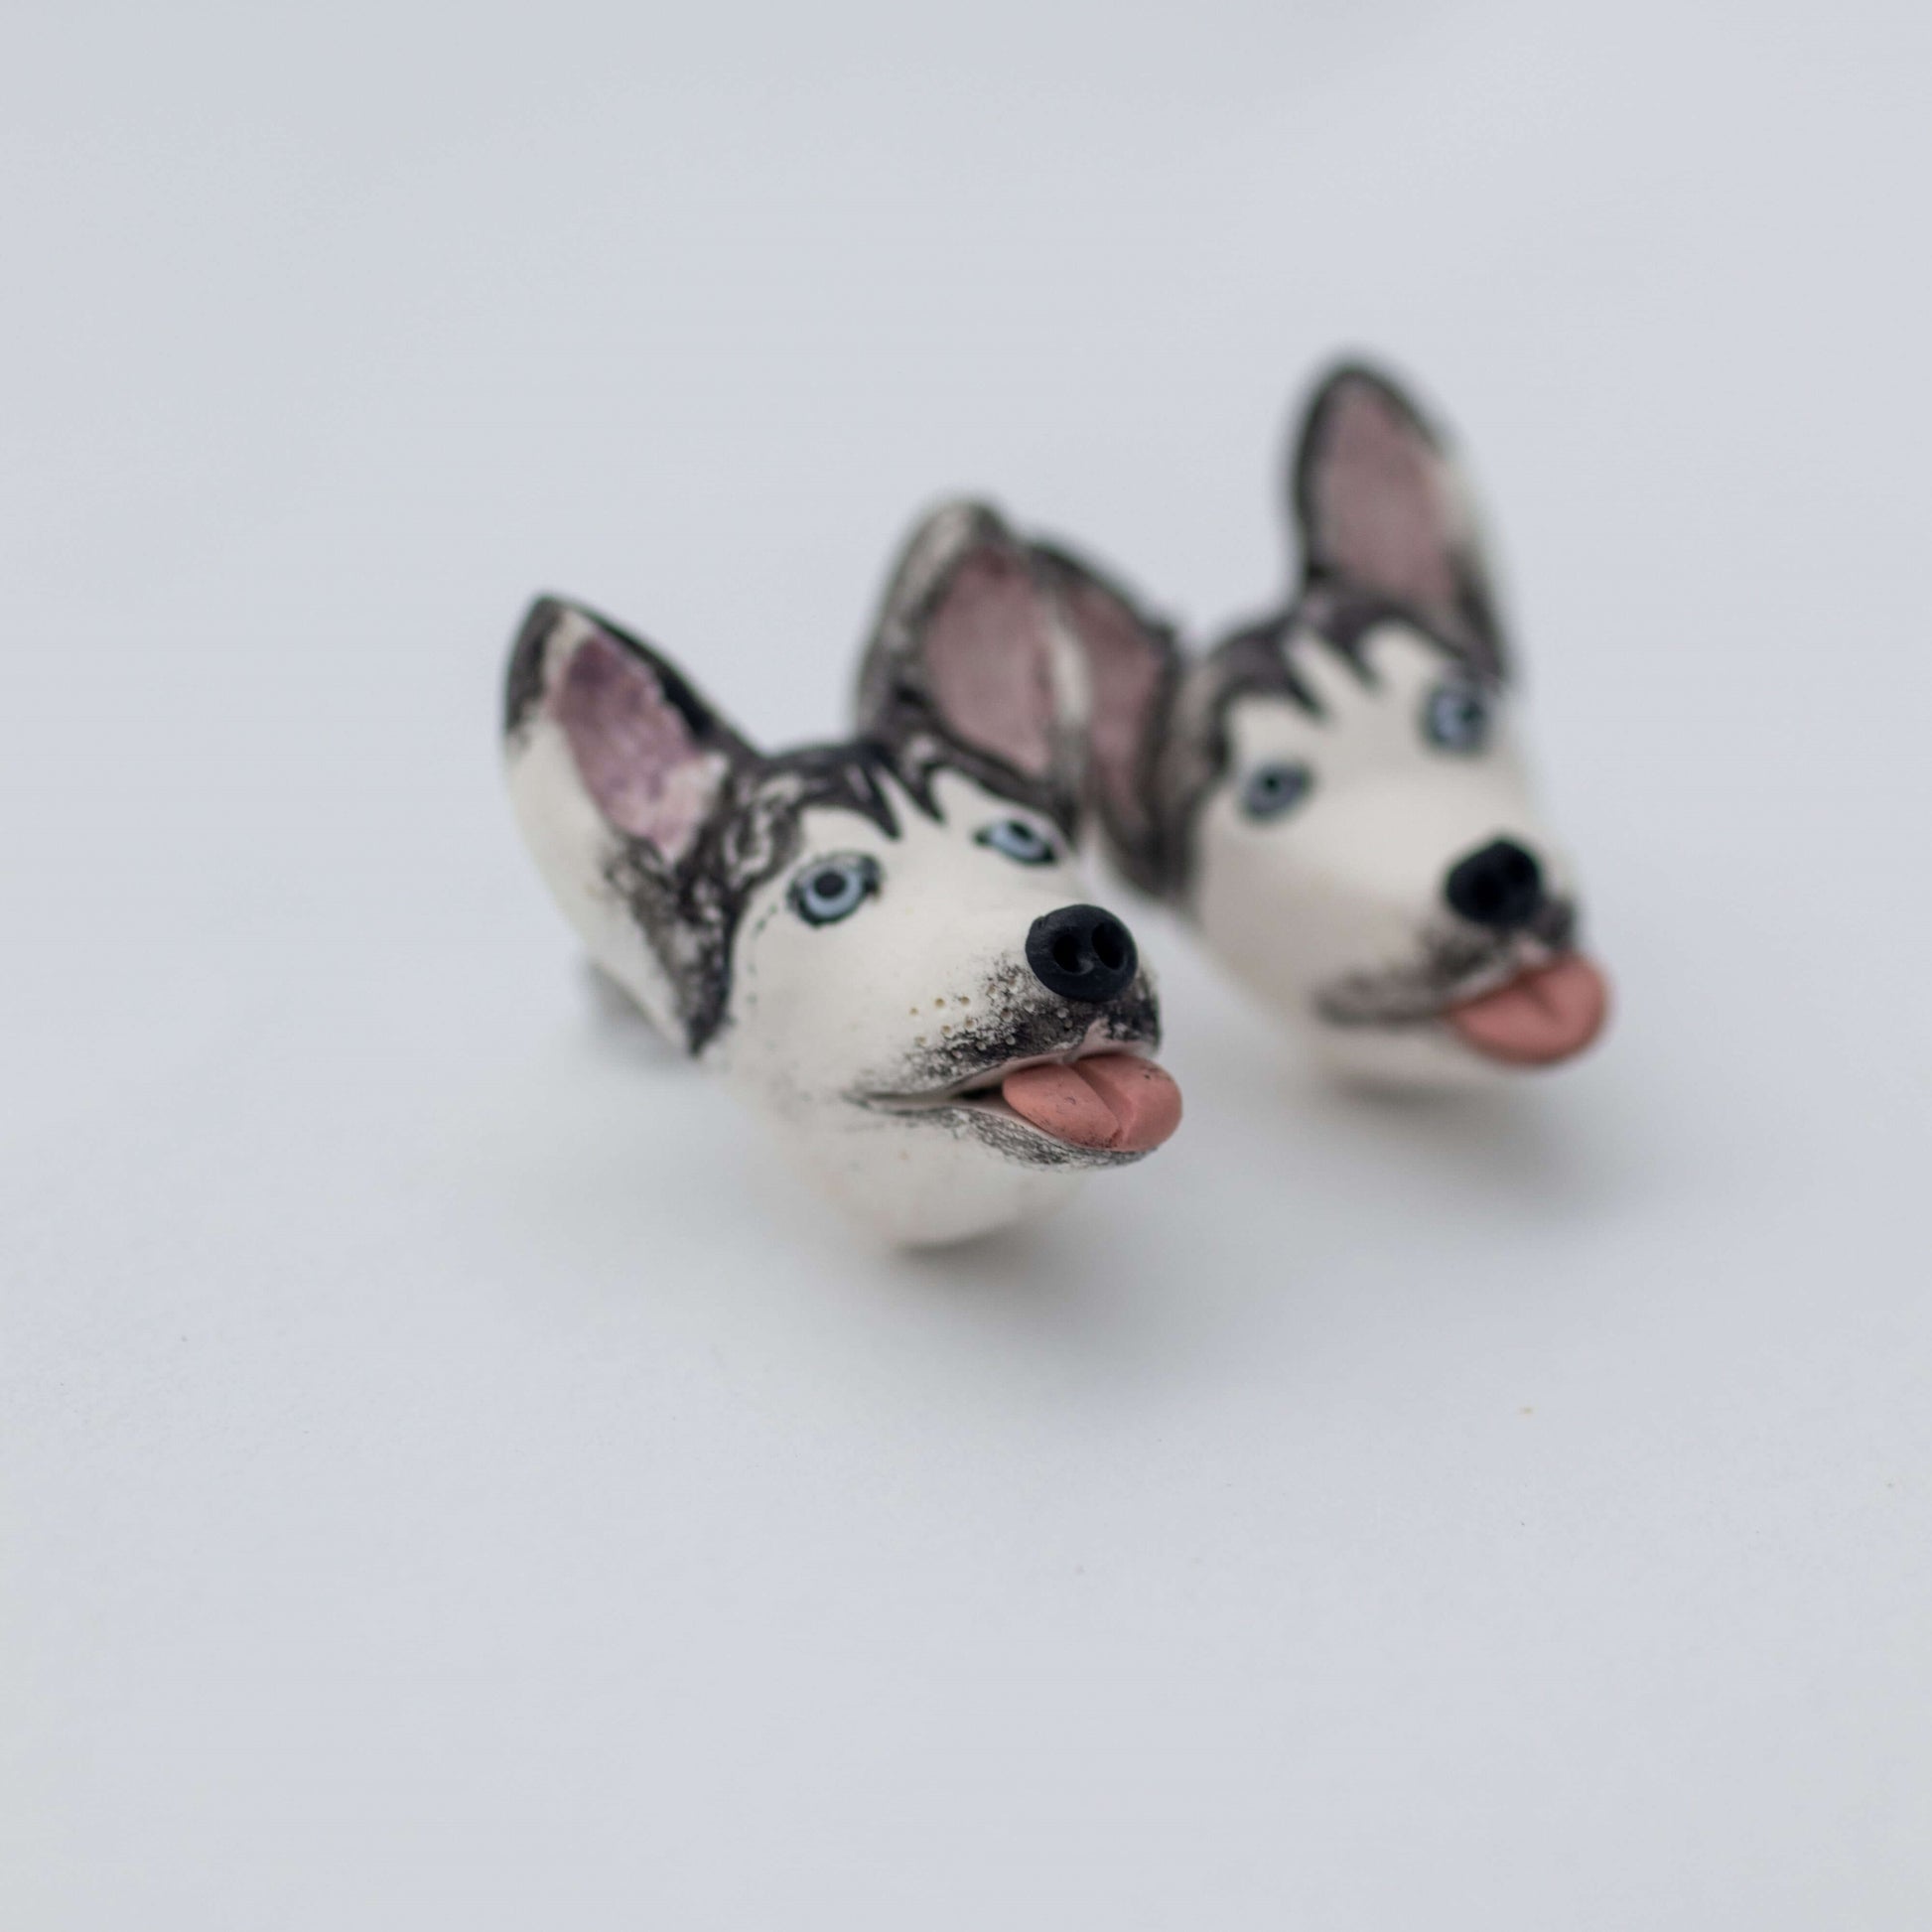 Handmade polymer clay husky stud earrings shown off cars up close